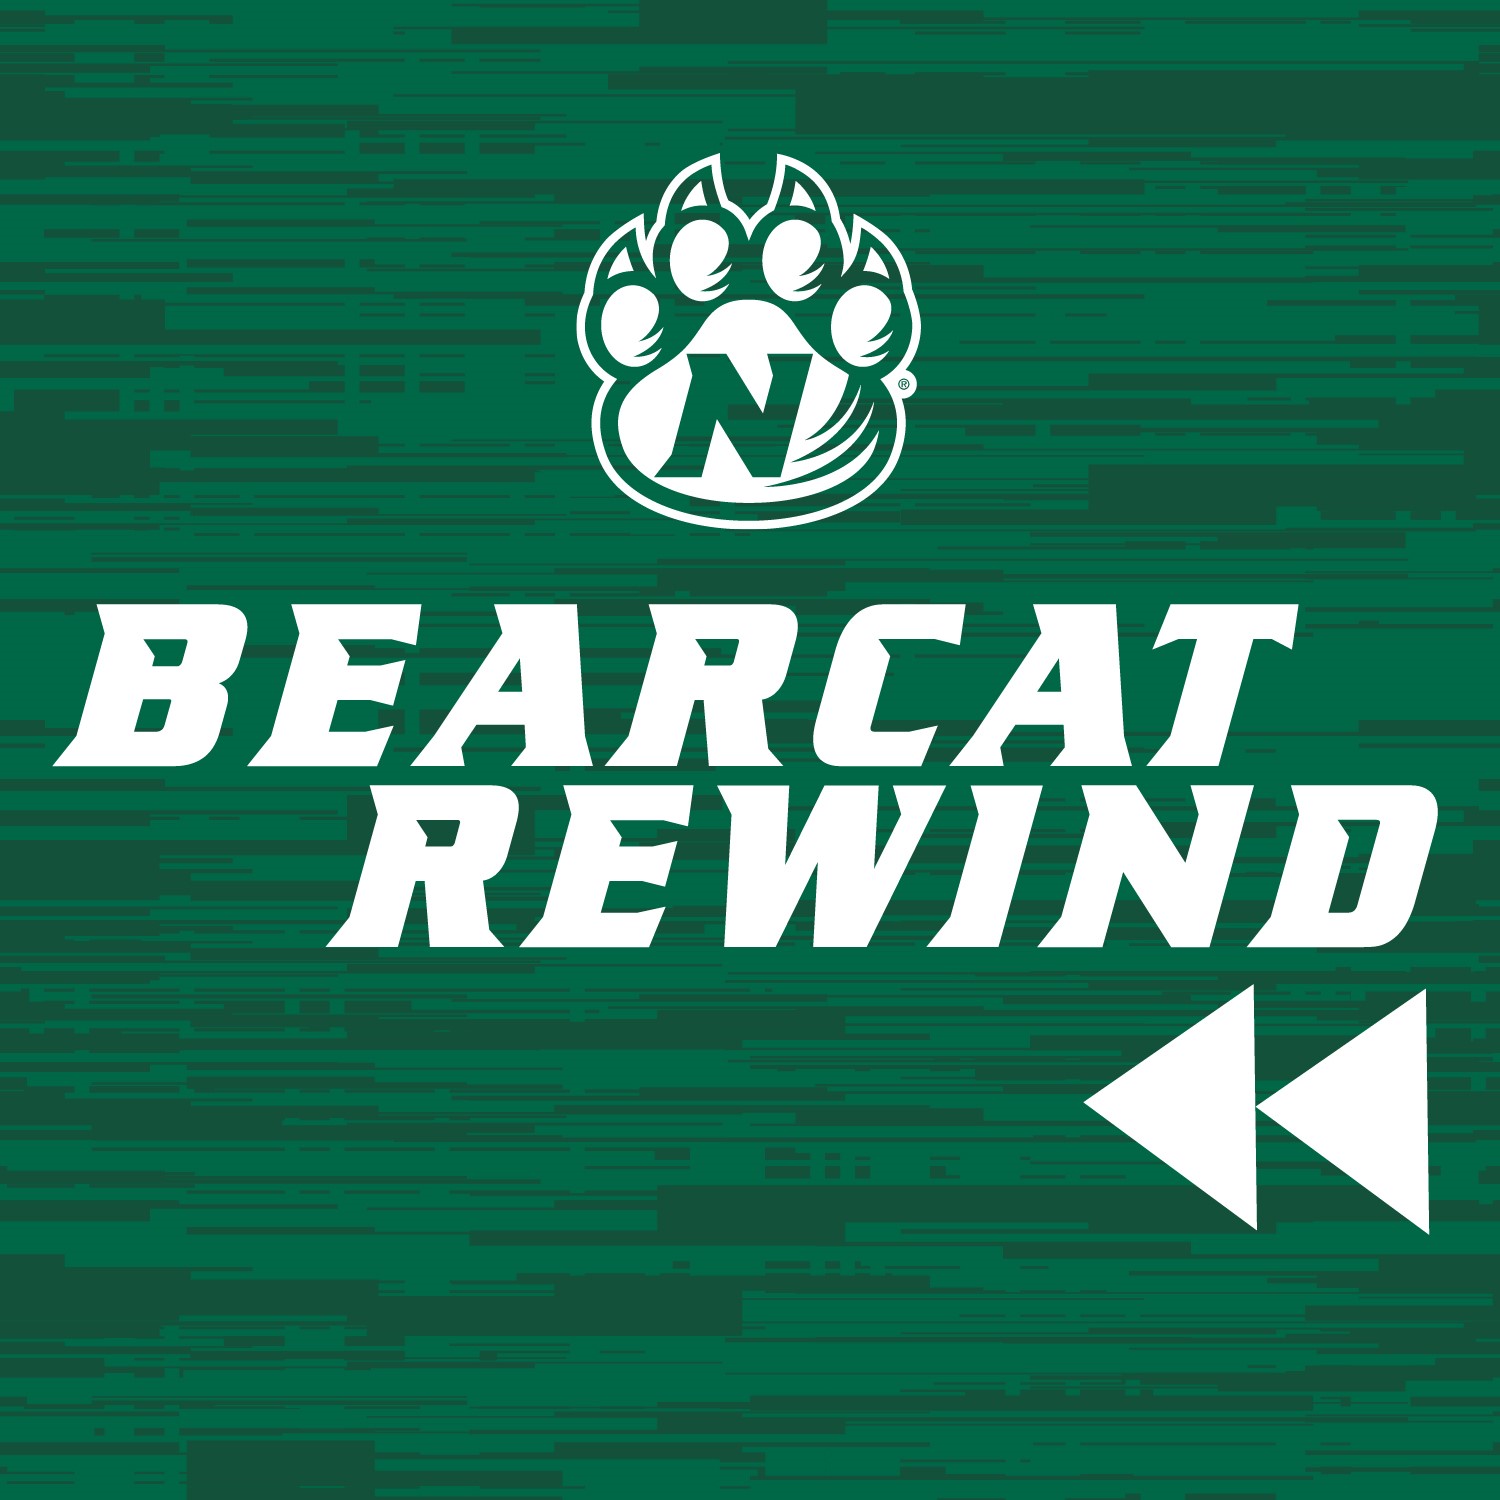 Bearcat Rewind